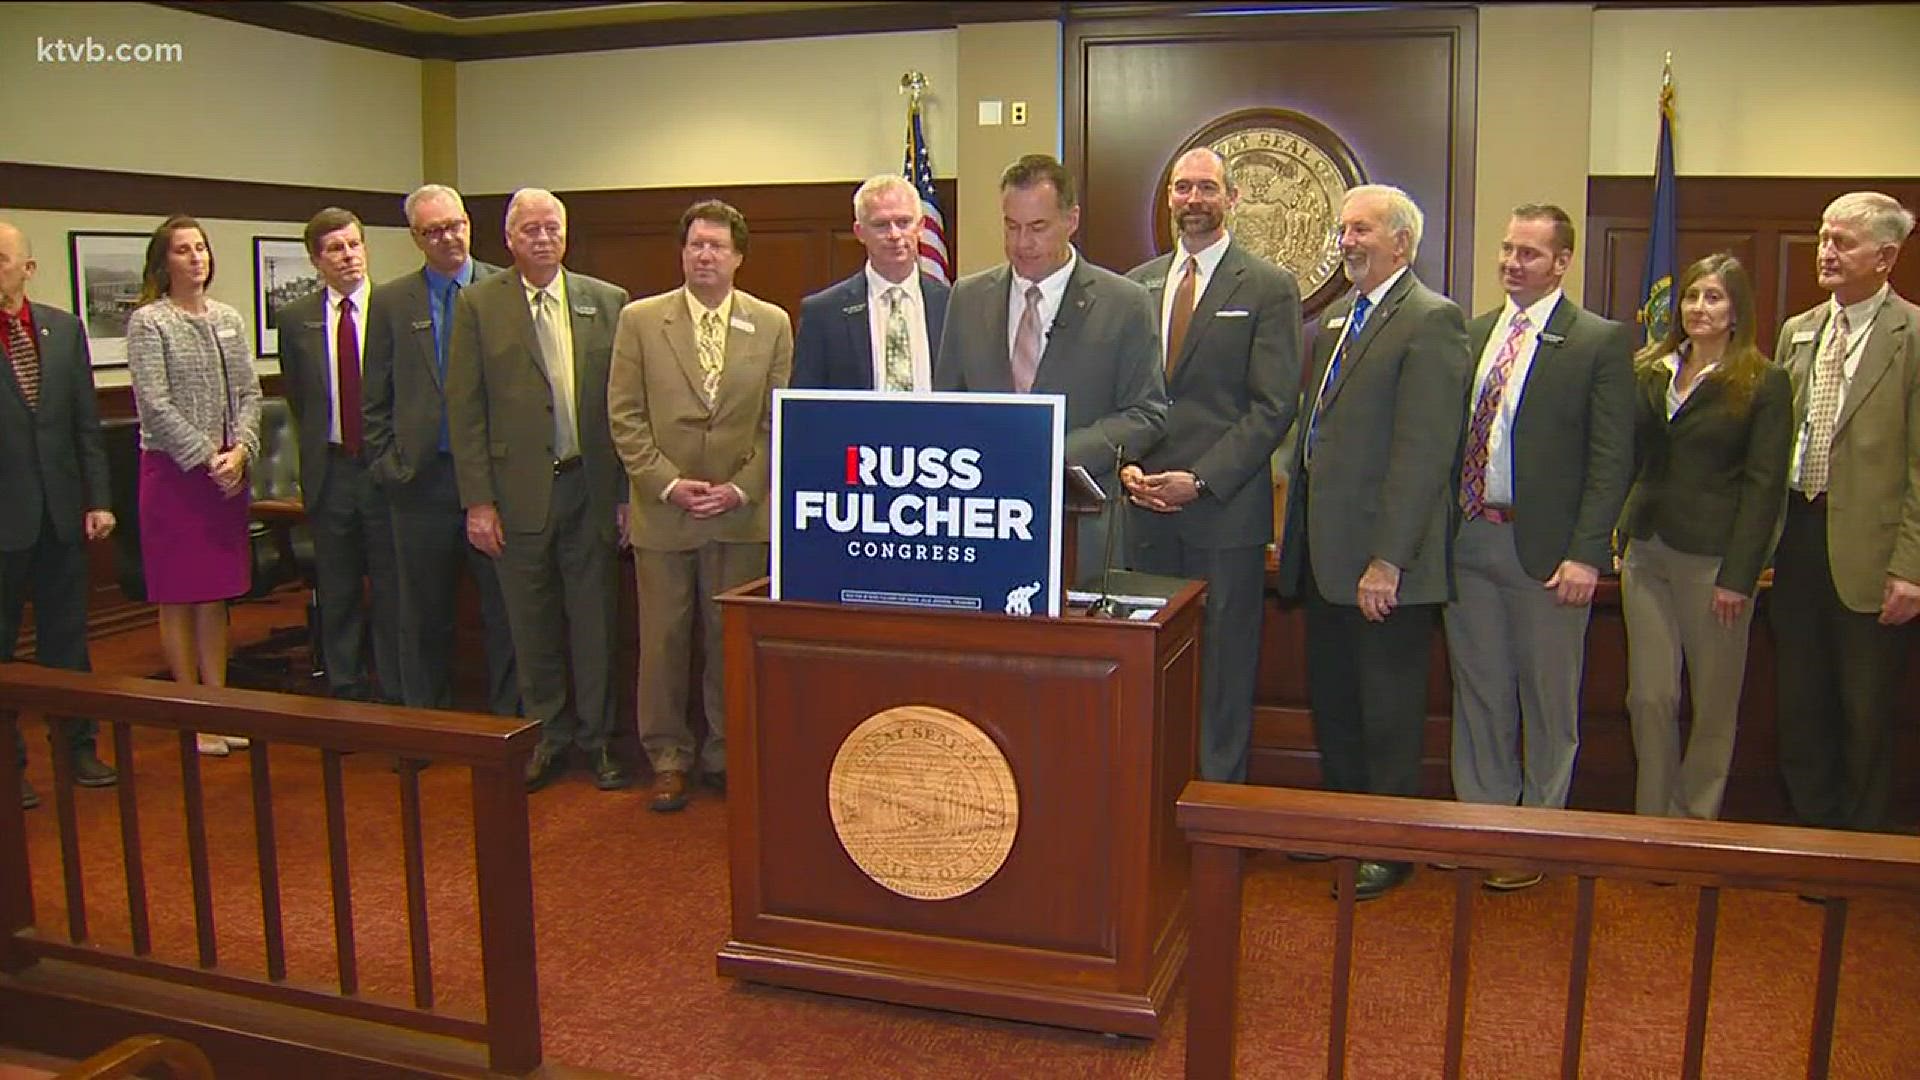 Texas Sen. Ted Cruz is backing Fulcher.